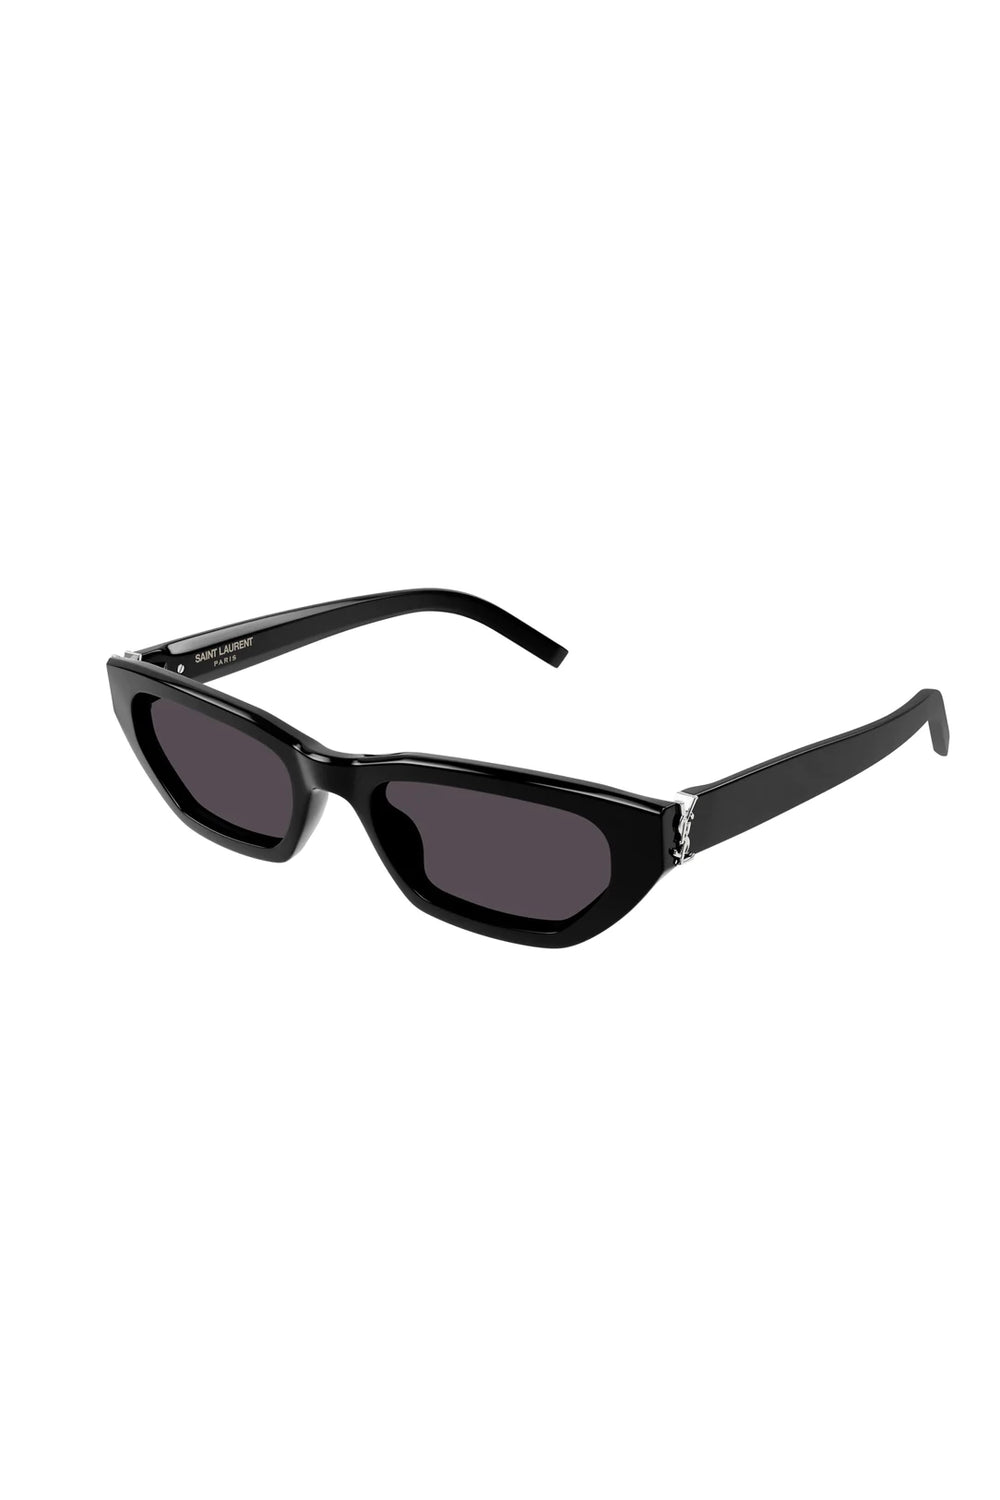 Saint Laurent Cat-Eye Sunglasses Black SLM126 001